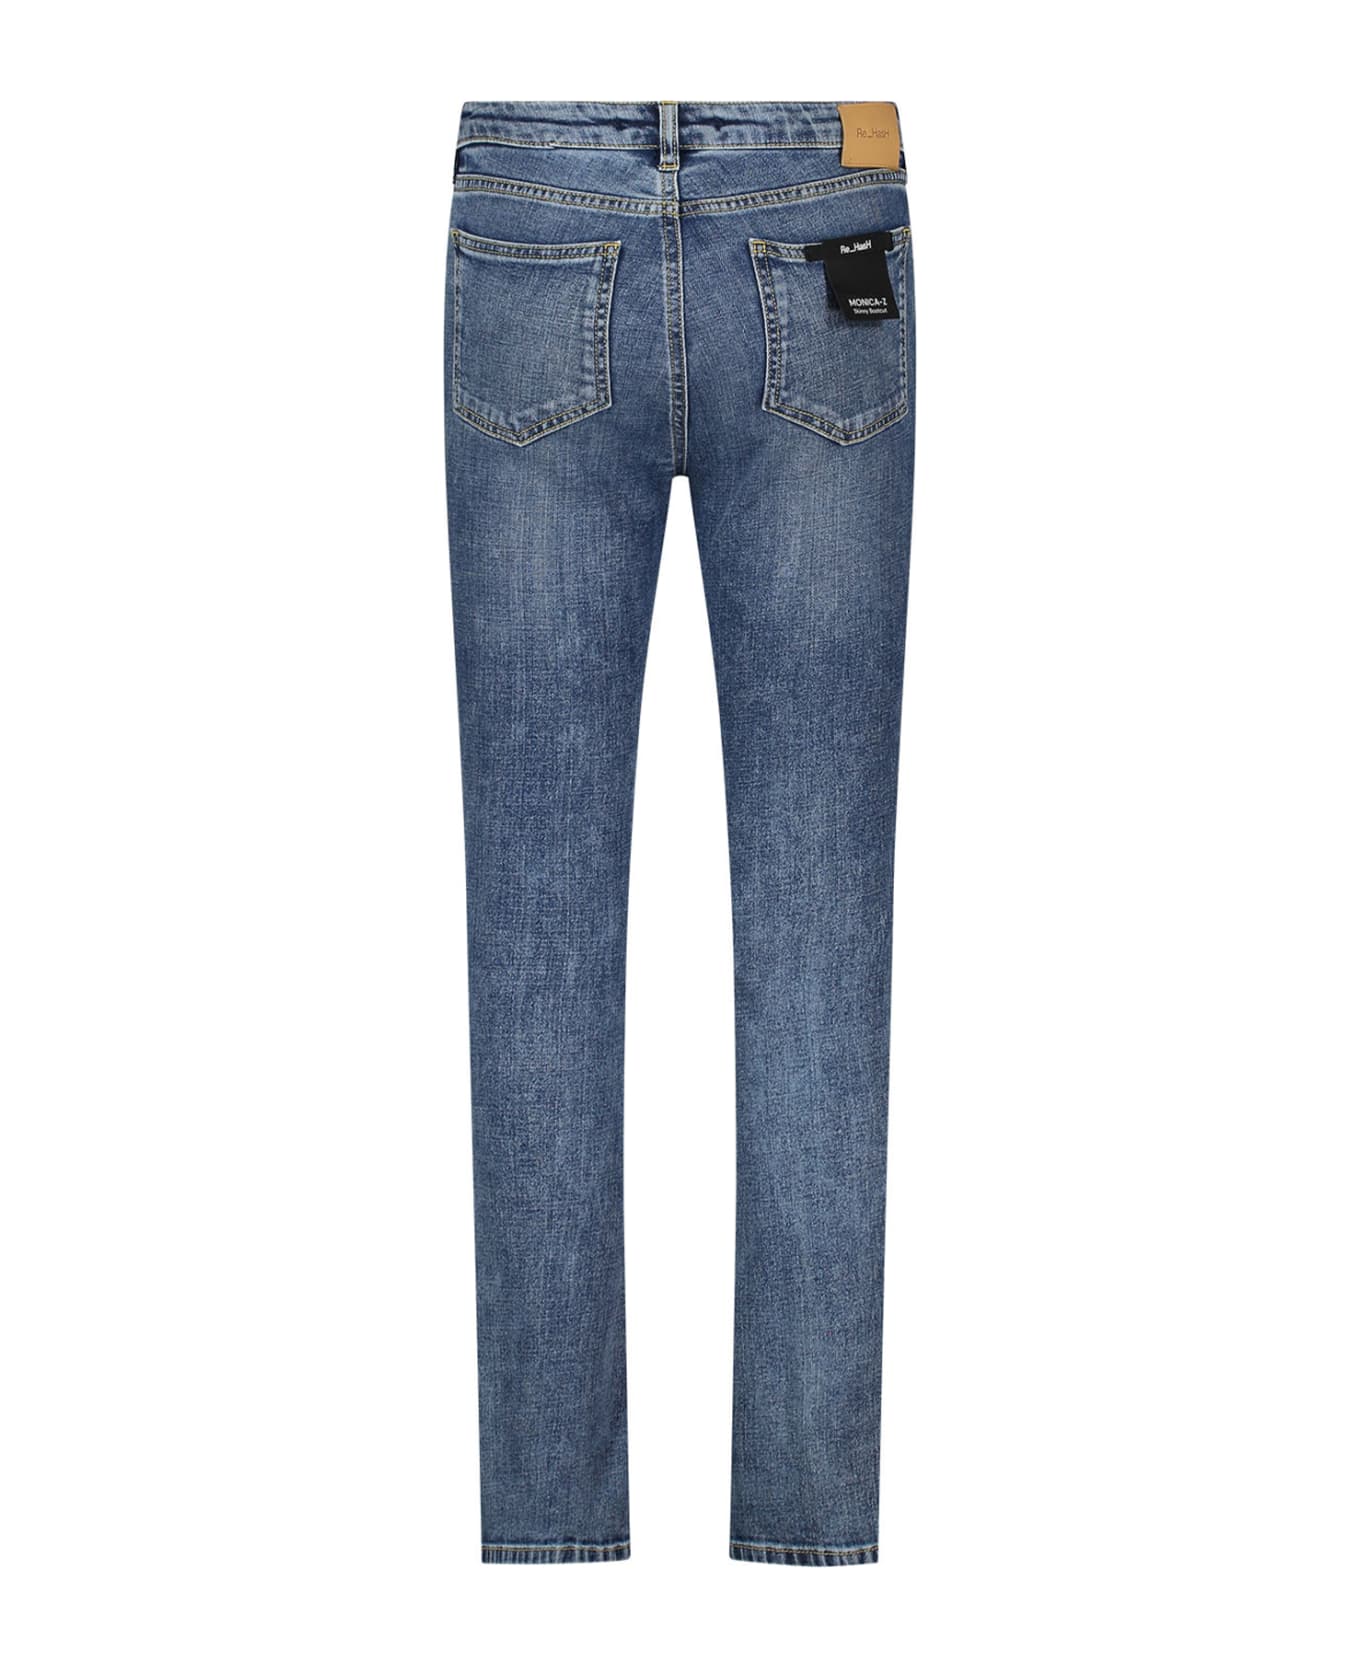 Re-HasH Slim Fit Jeans In Blue Denim - DENIM BLU